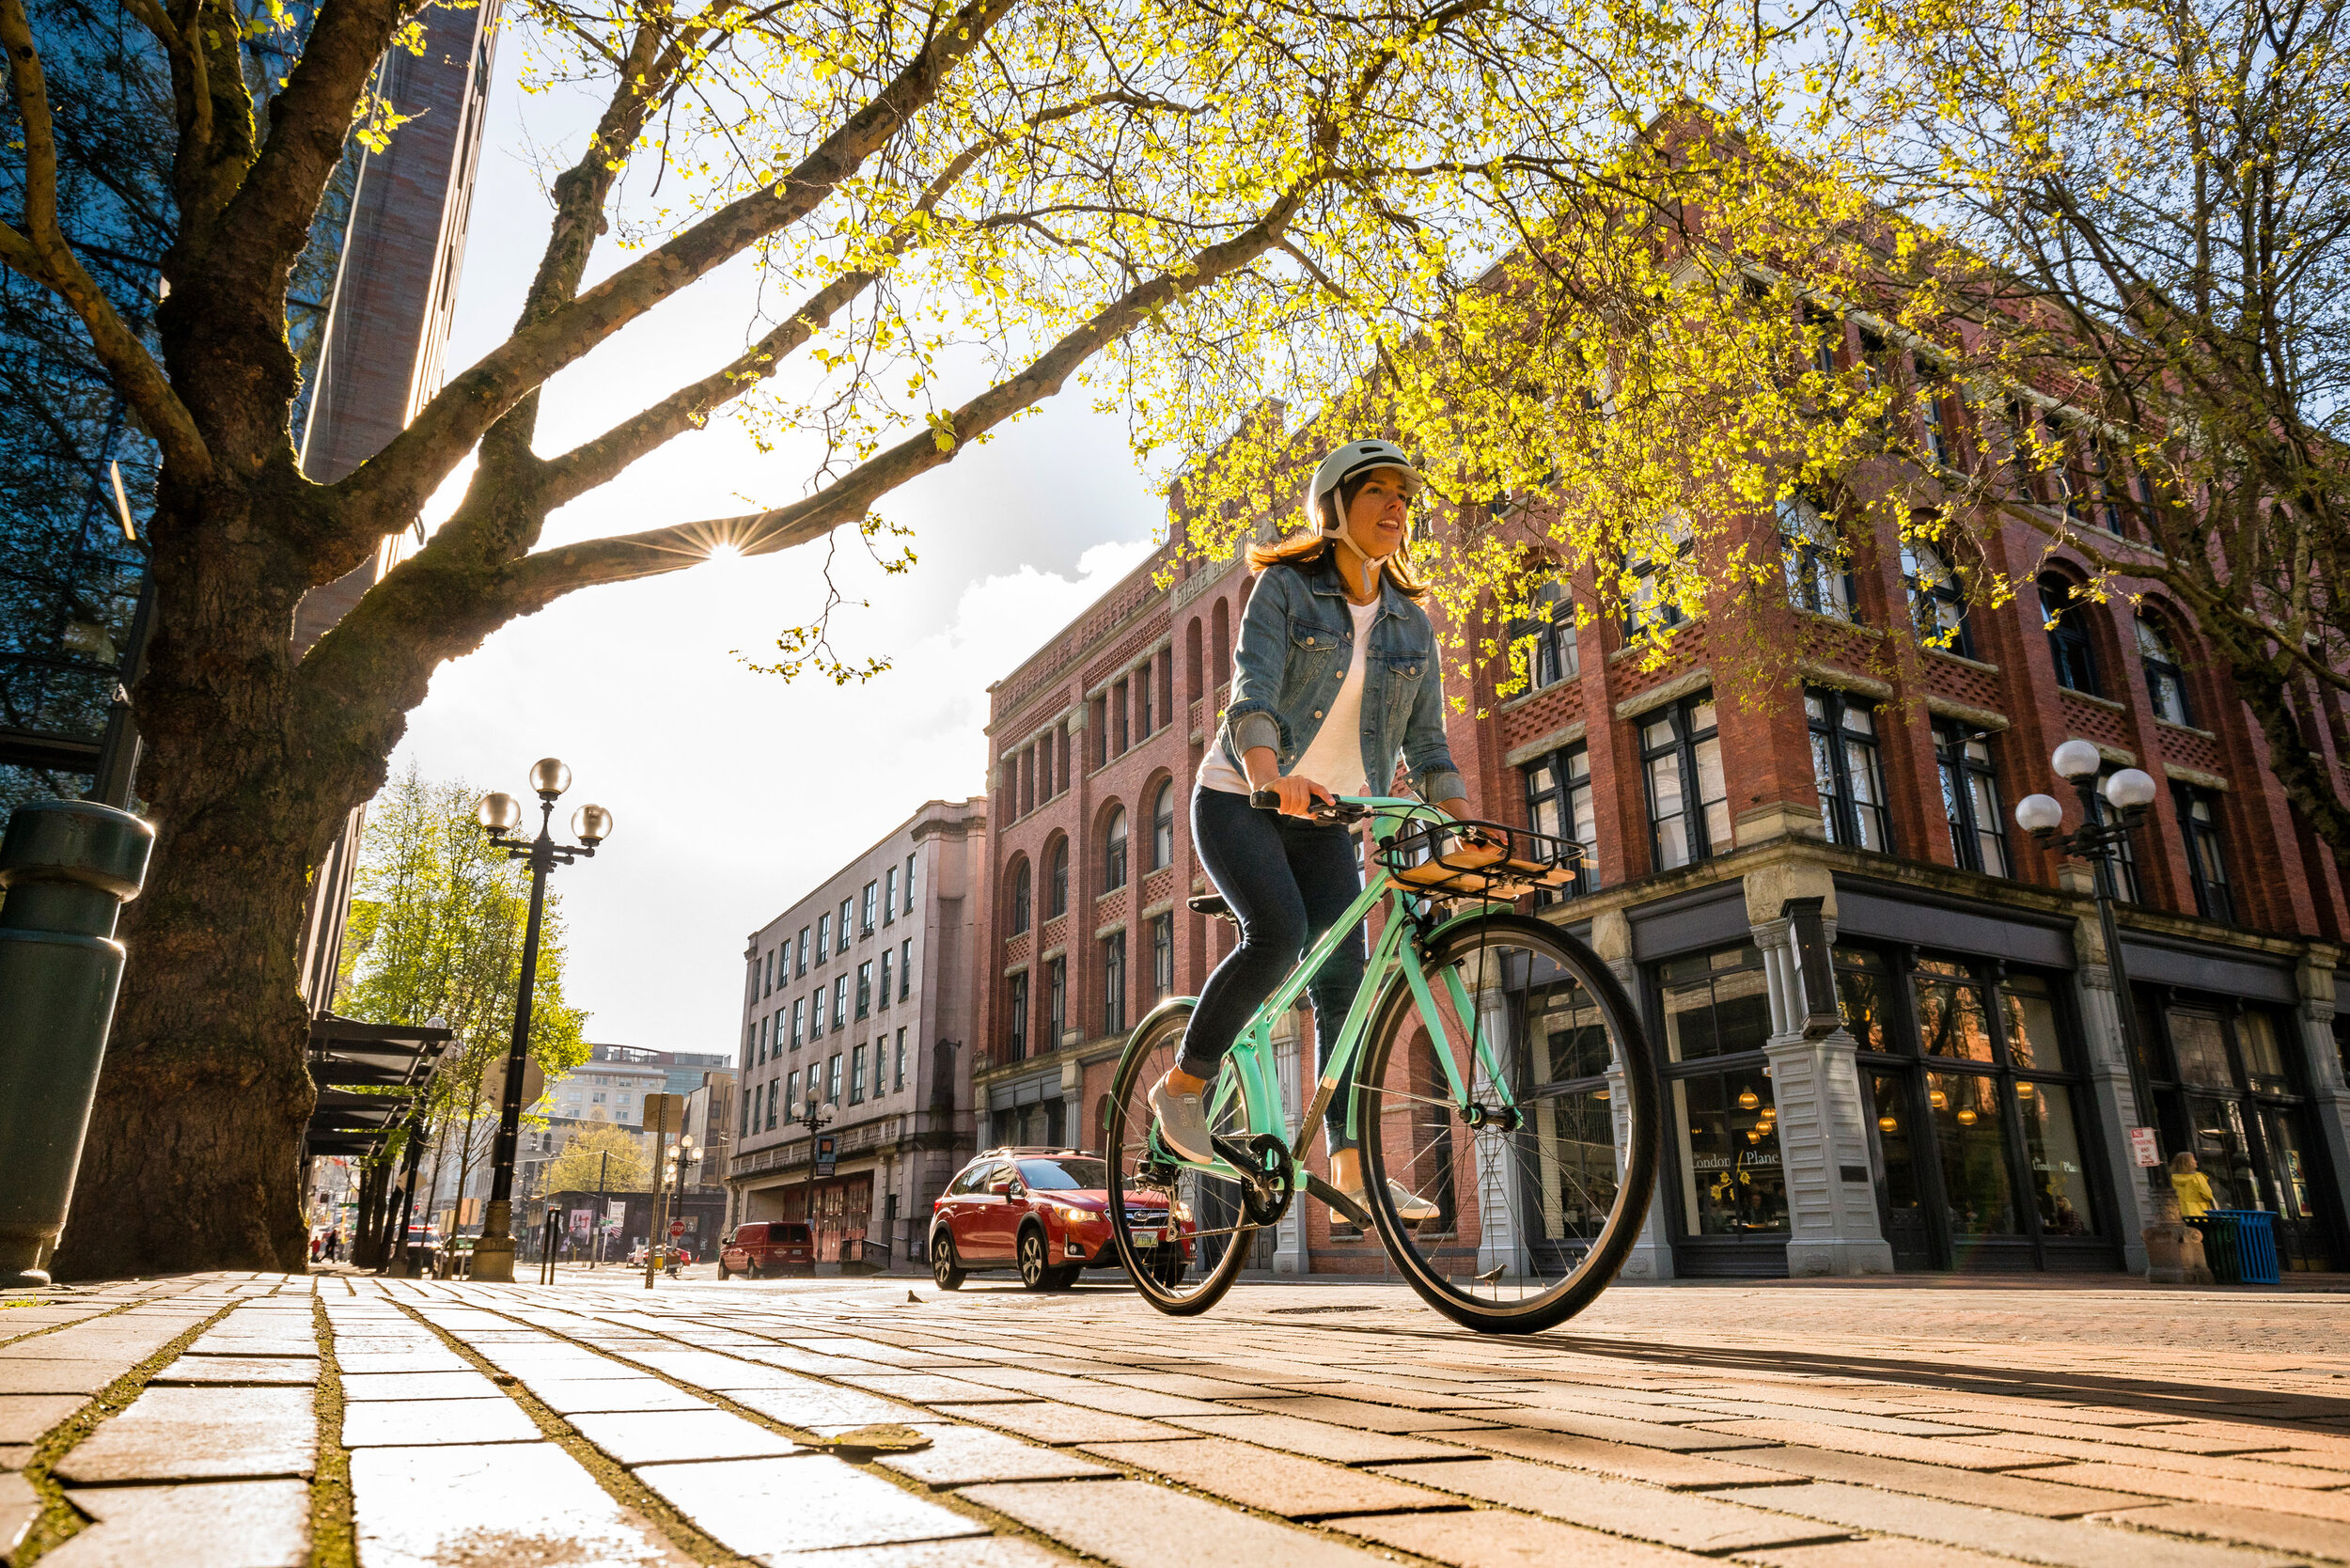  Lifestyle: Urban lifestyle and biking in Pioneer Square, downtown Seattle, Washington 